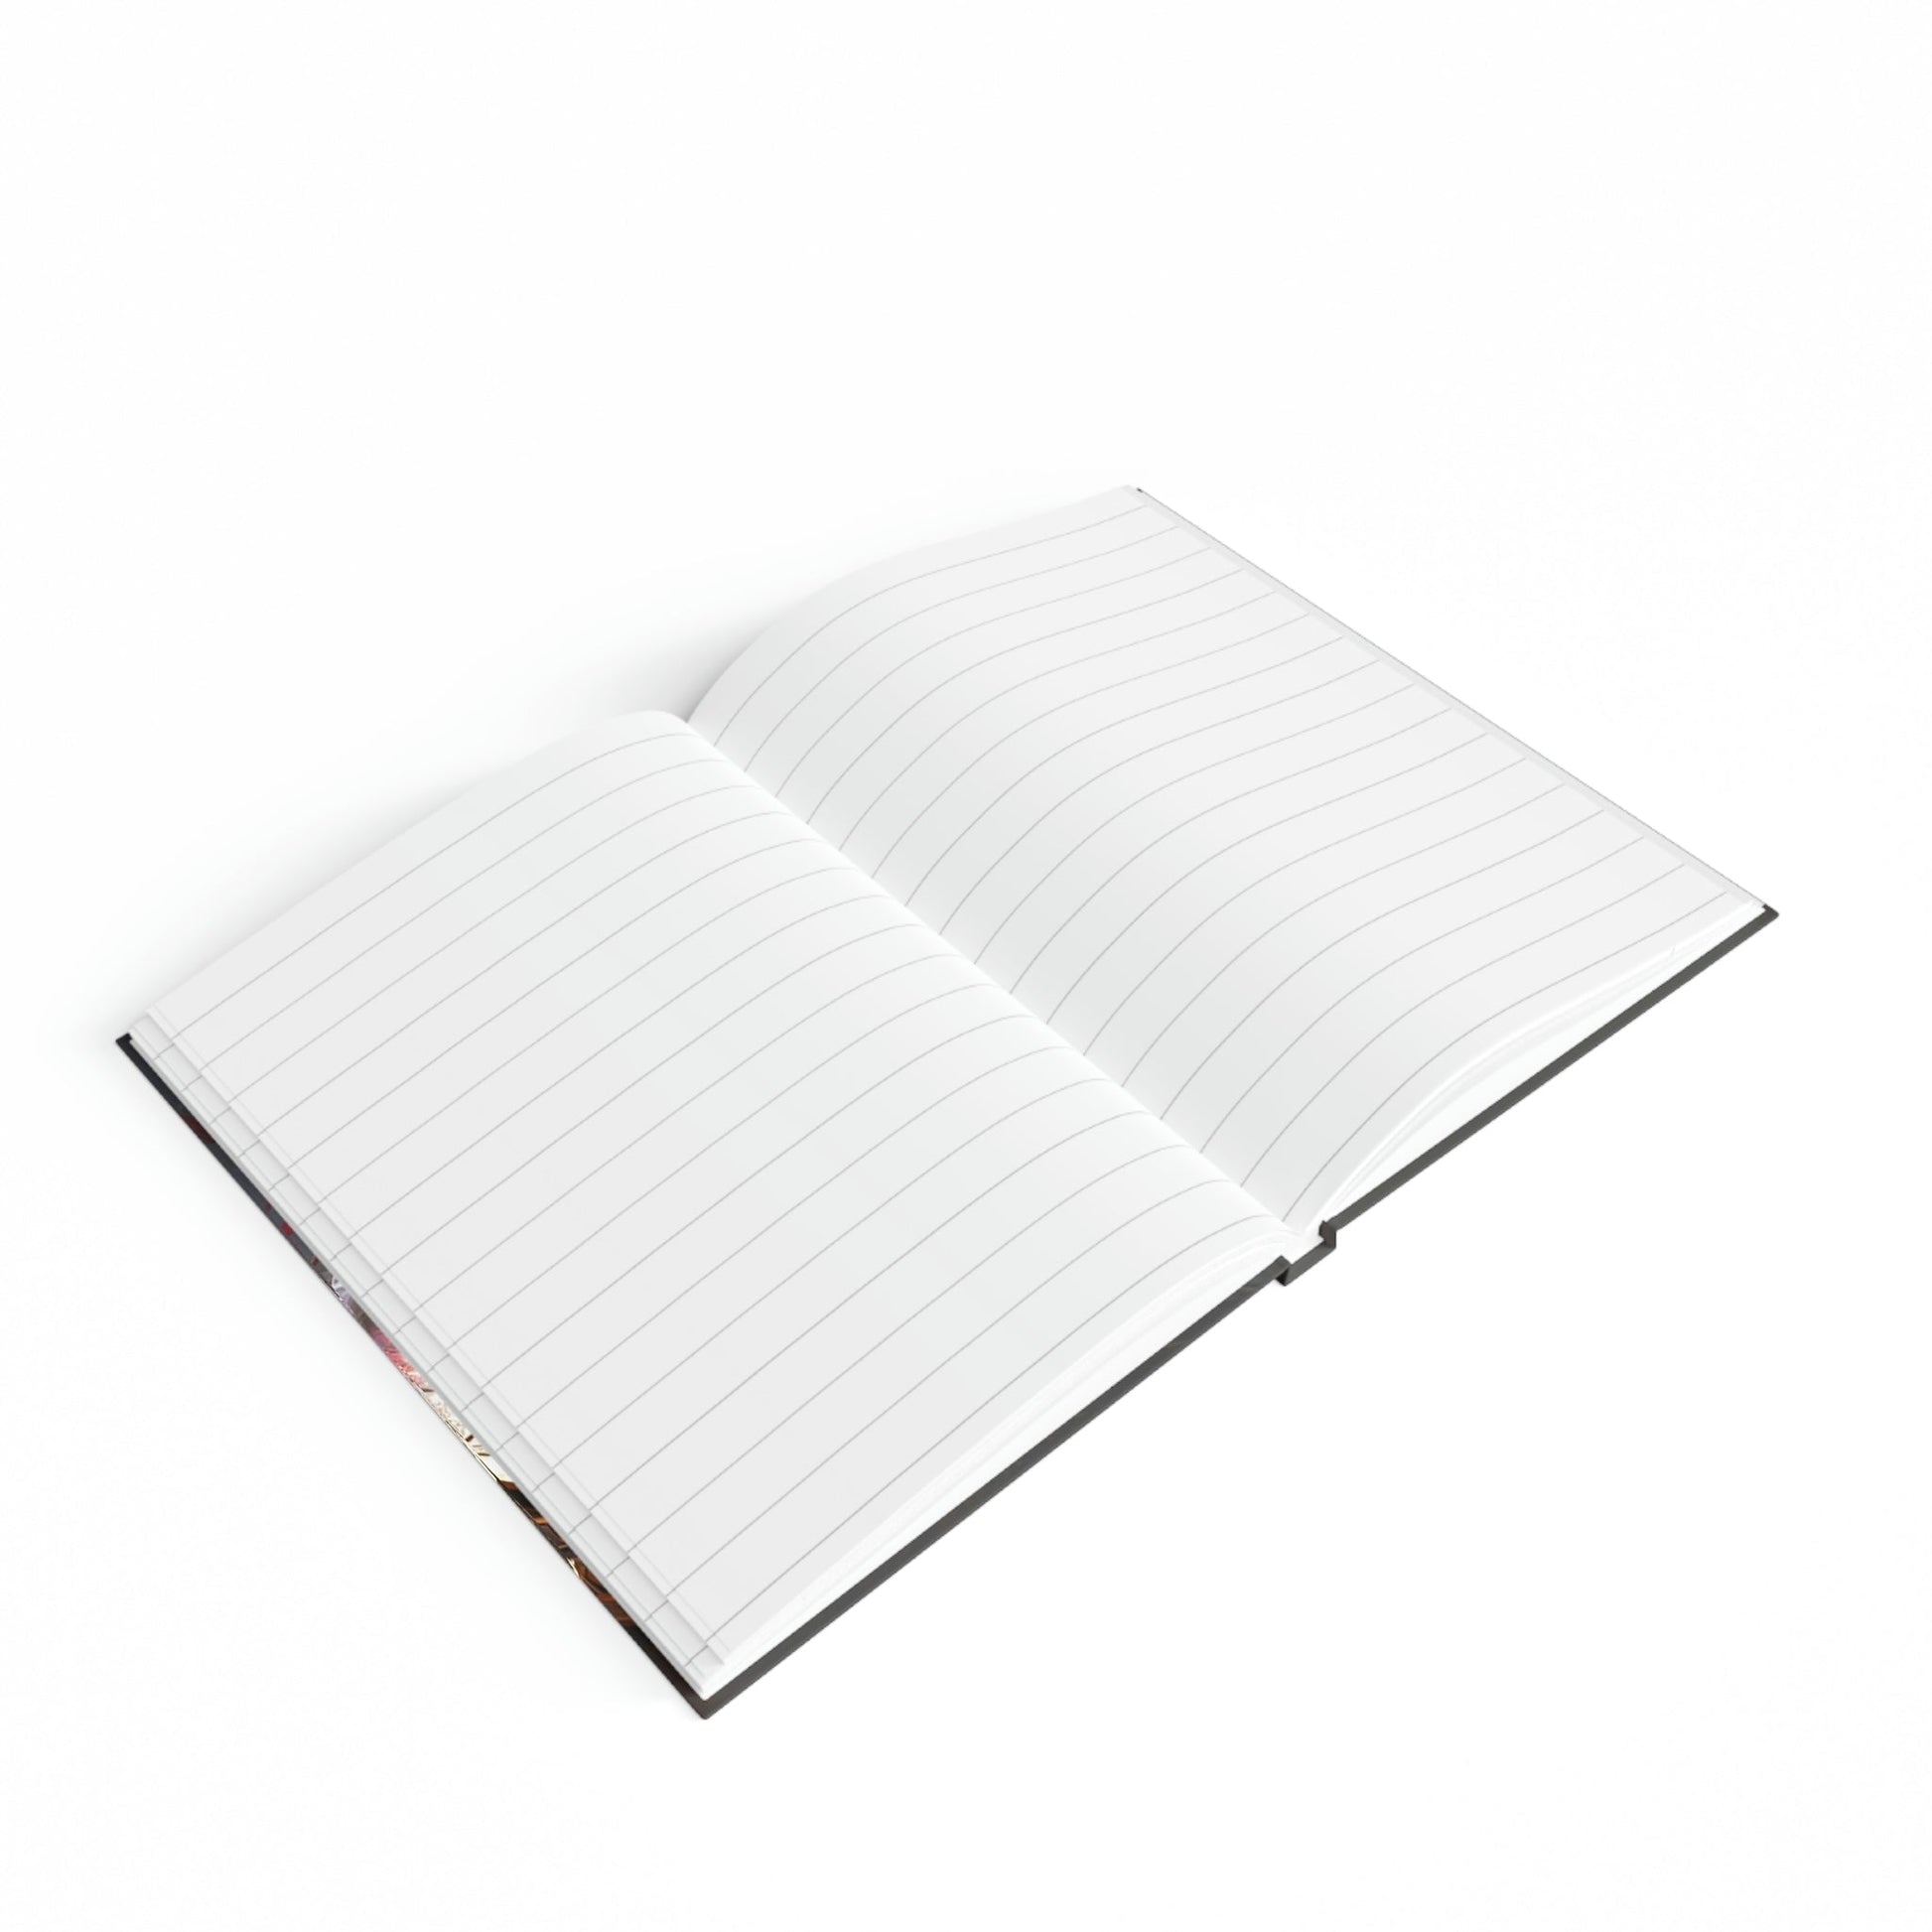 Oden the God Notebook - Helmet - Hard Backed Journal